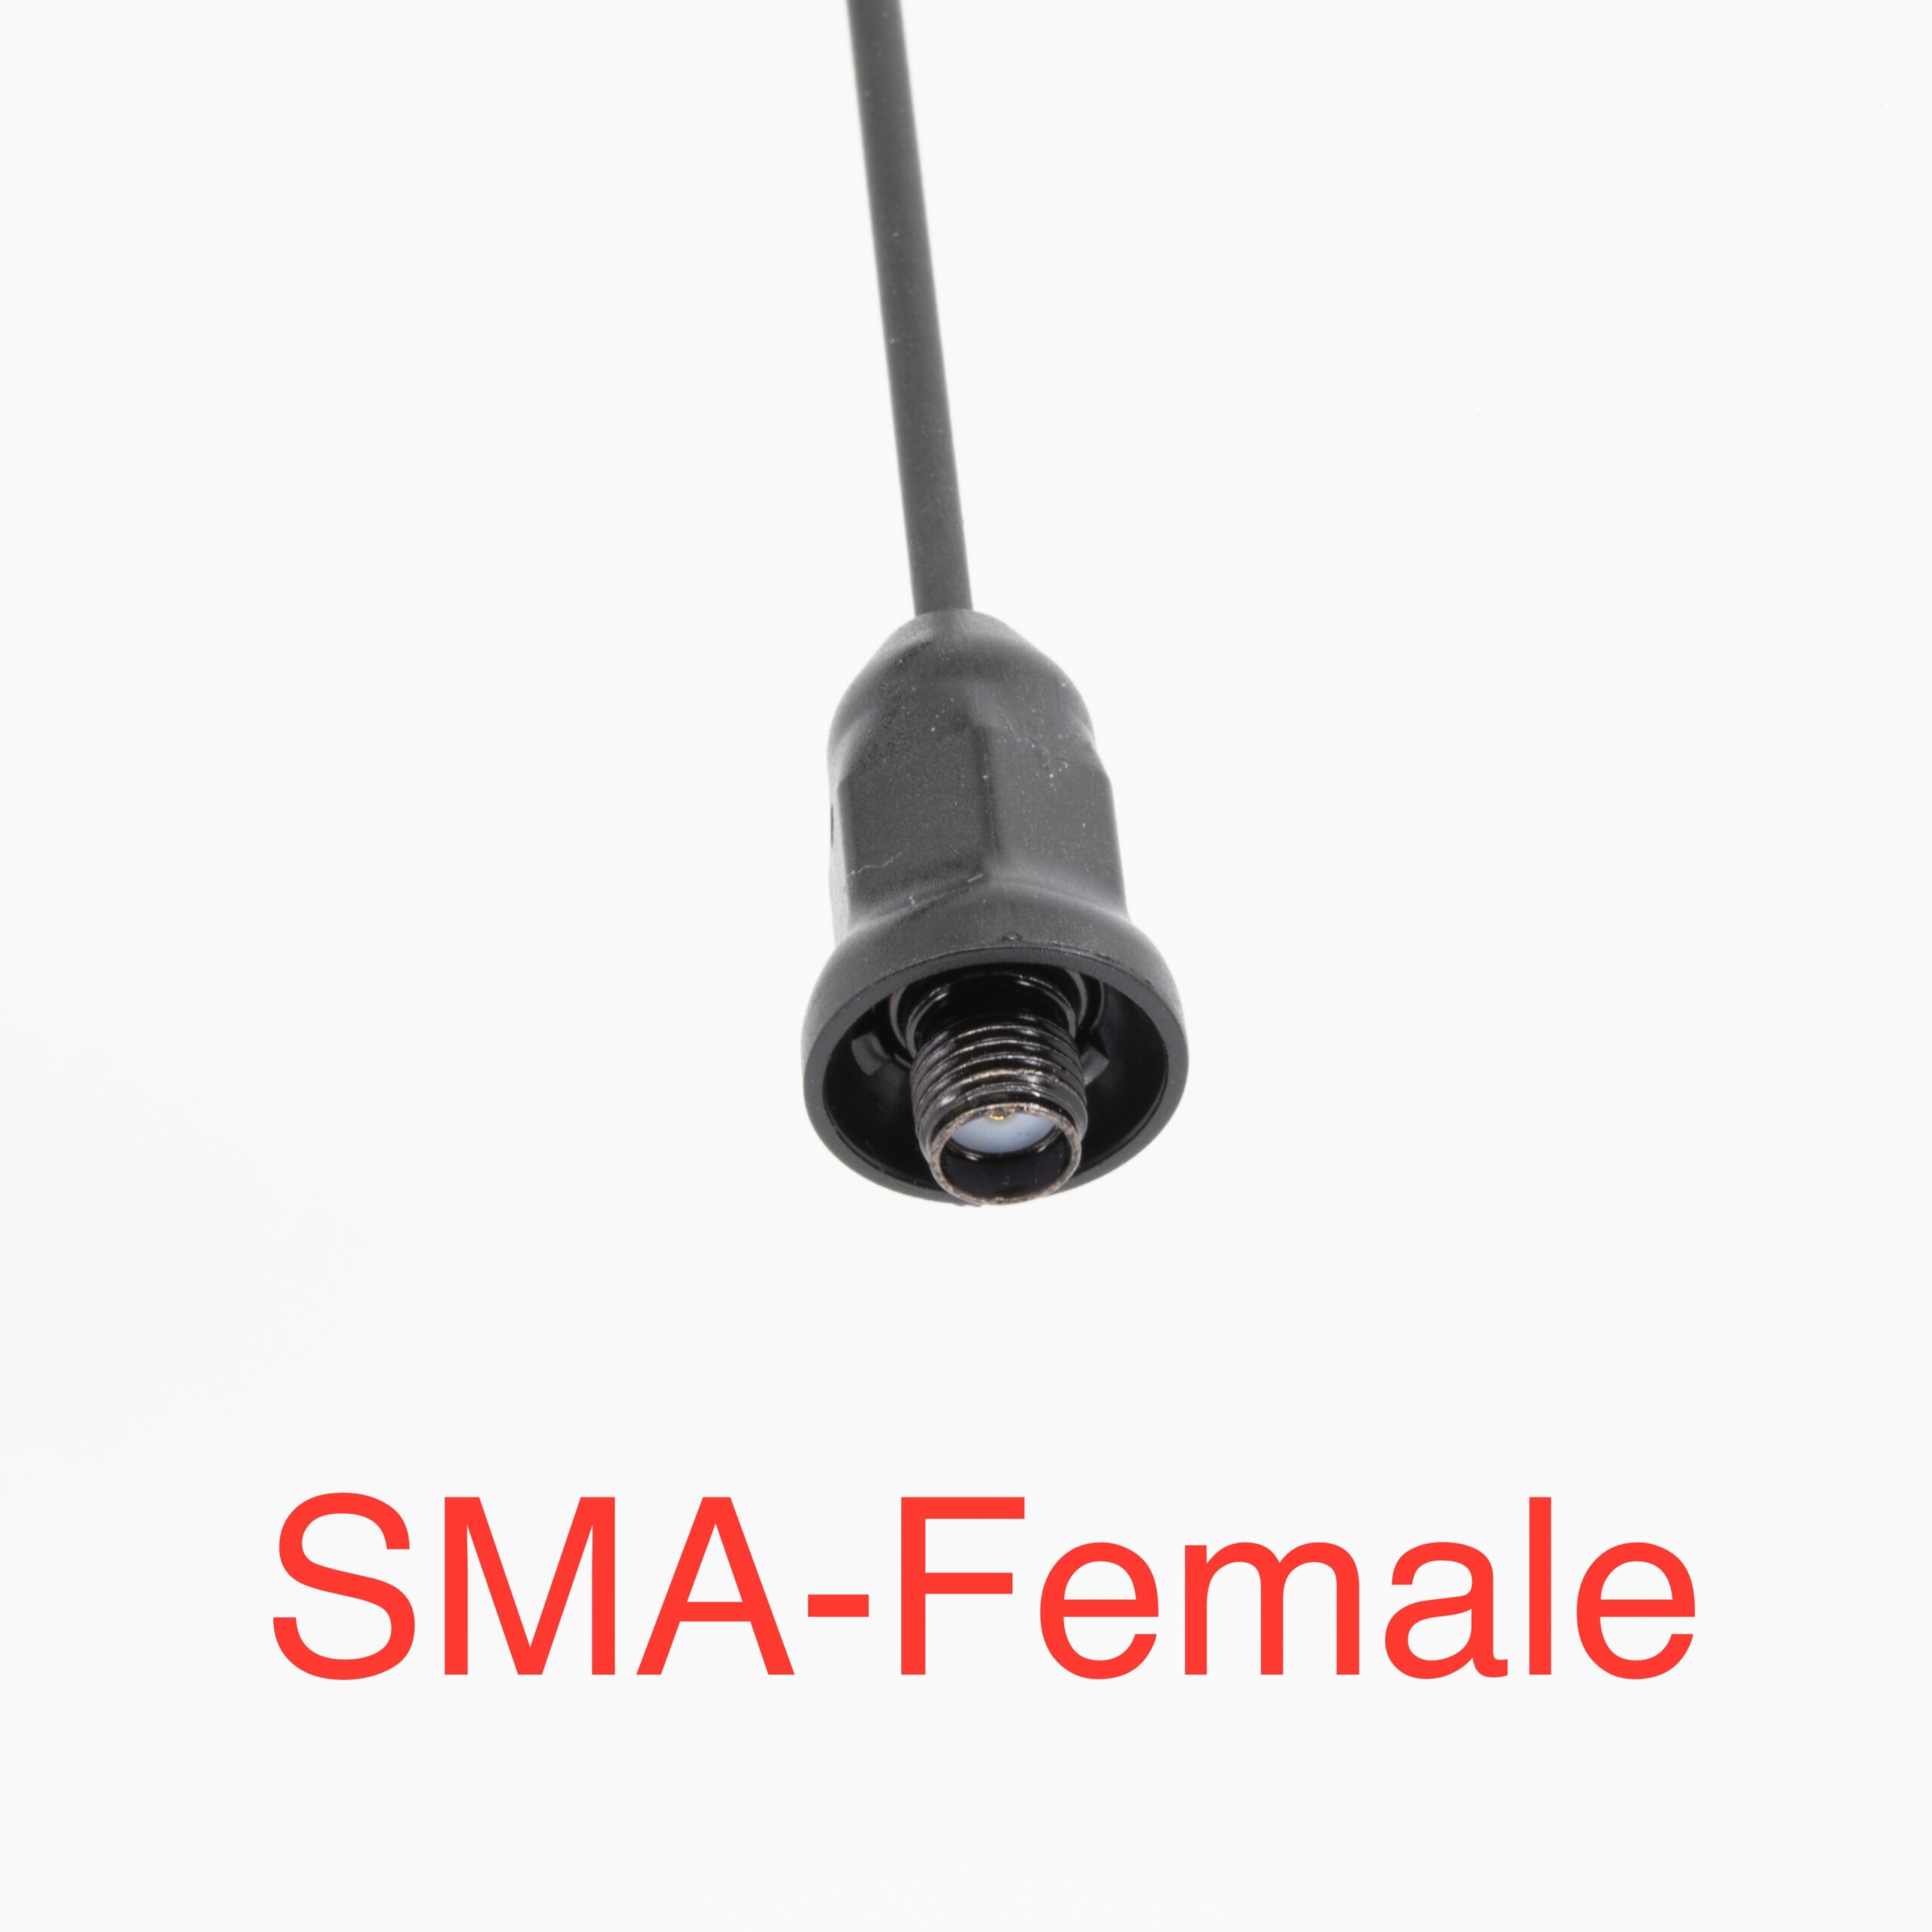 https://signalstuff.com/wp-content/uploads/2020/07/SMA-Female-Black-labeled-scaled.jpg